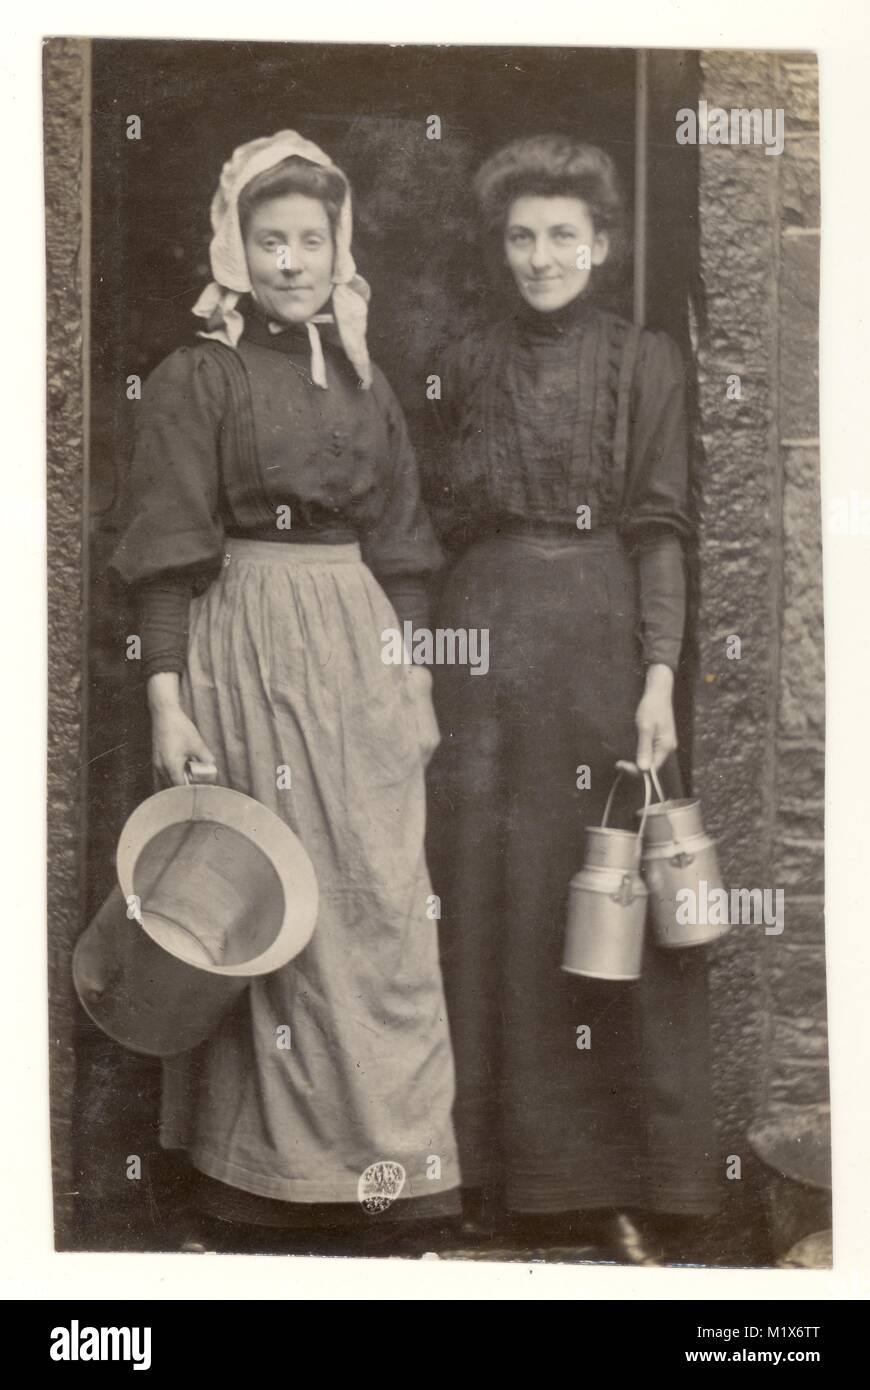 Bache Otto - the Milk Maid - Danish School - 19th and Early 20th